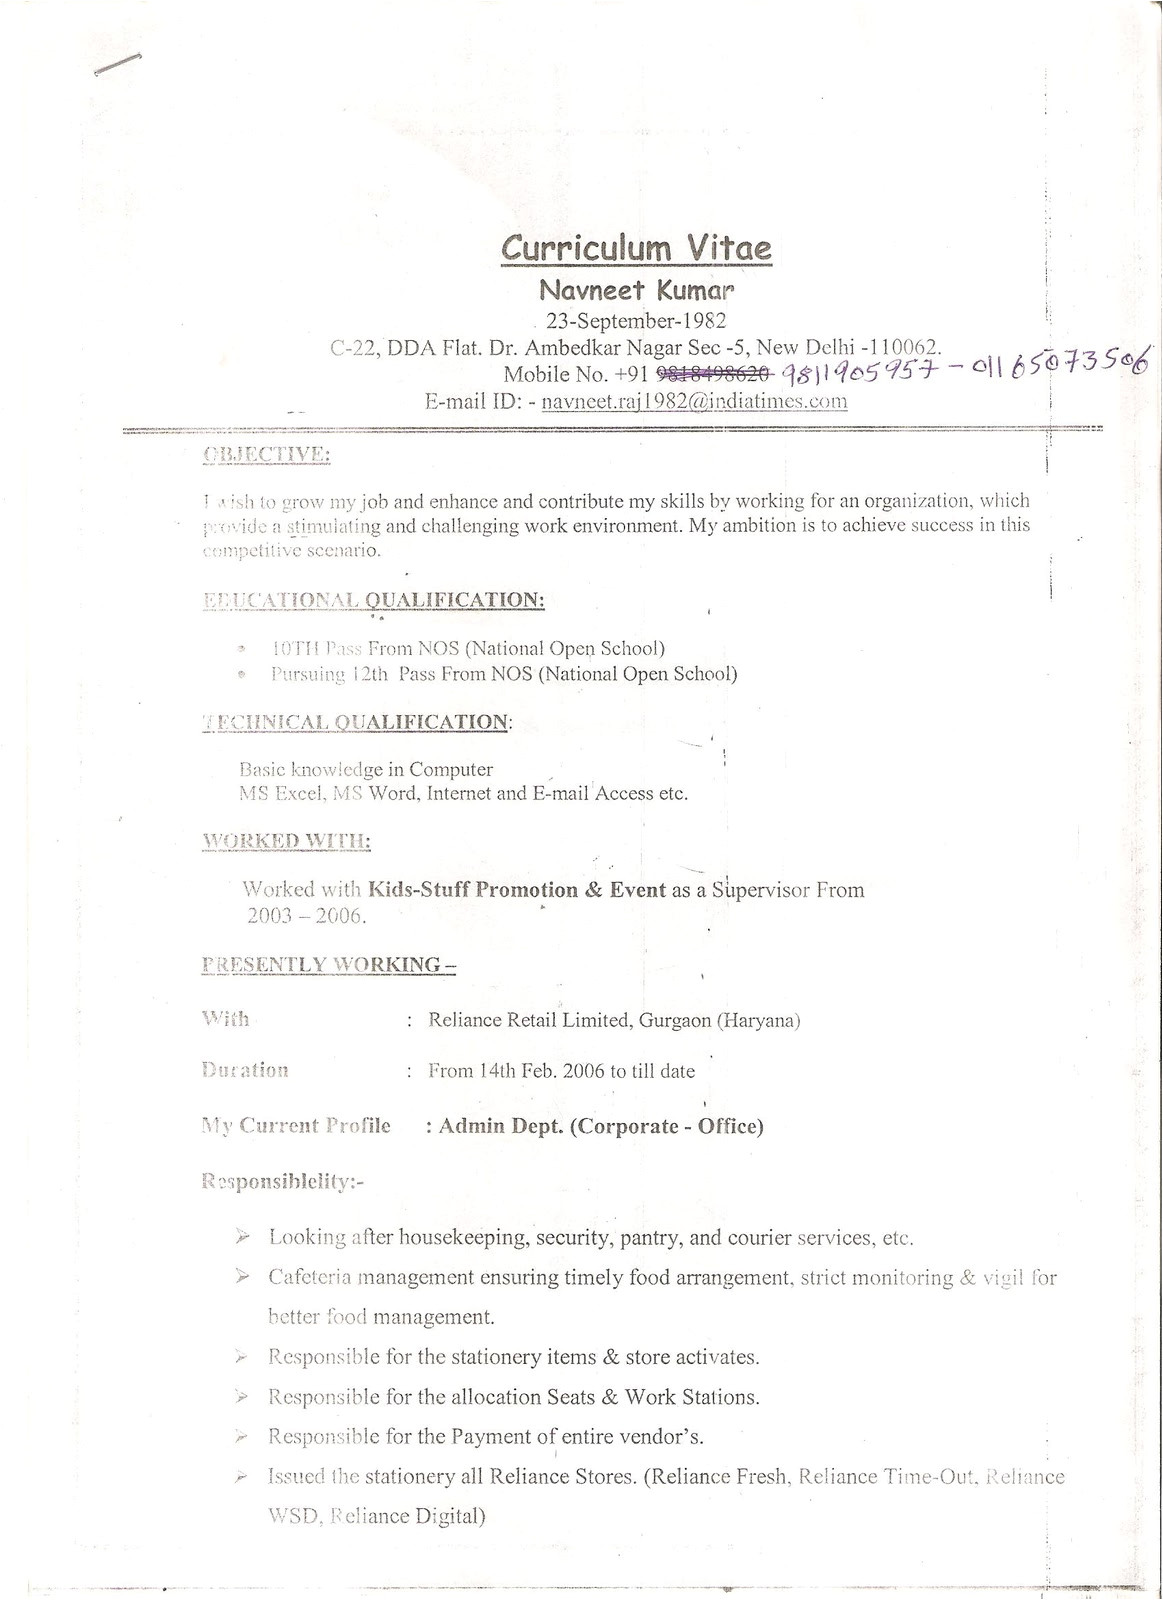 resume office boypaintryreceptionest